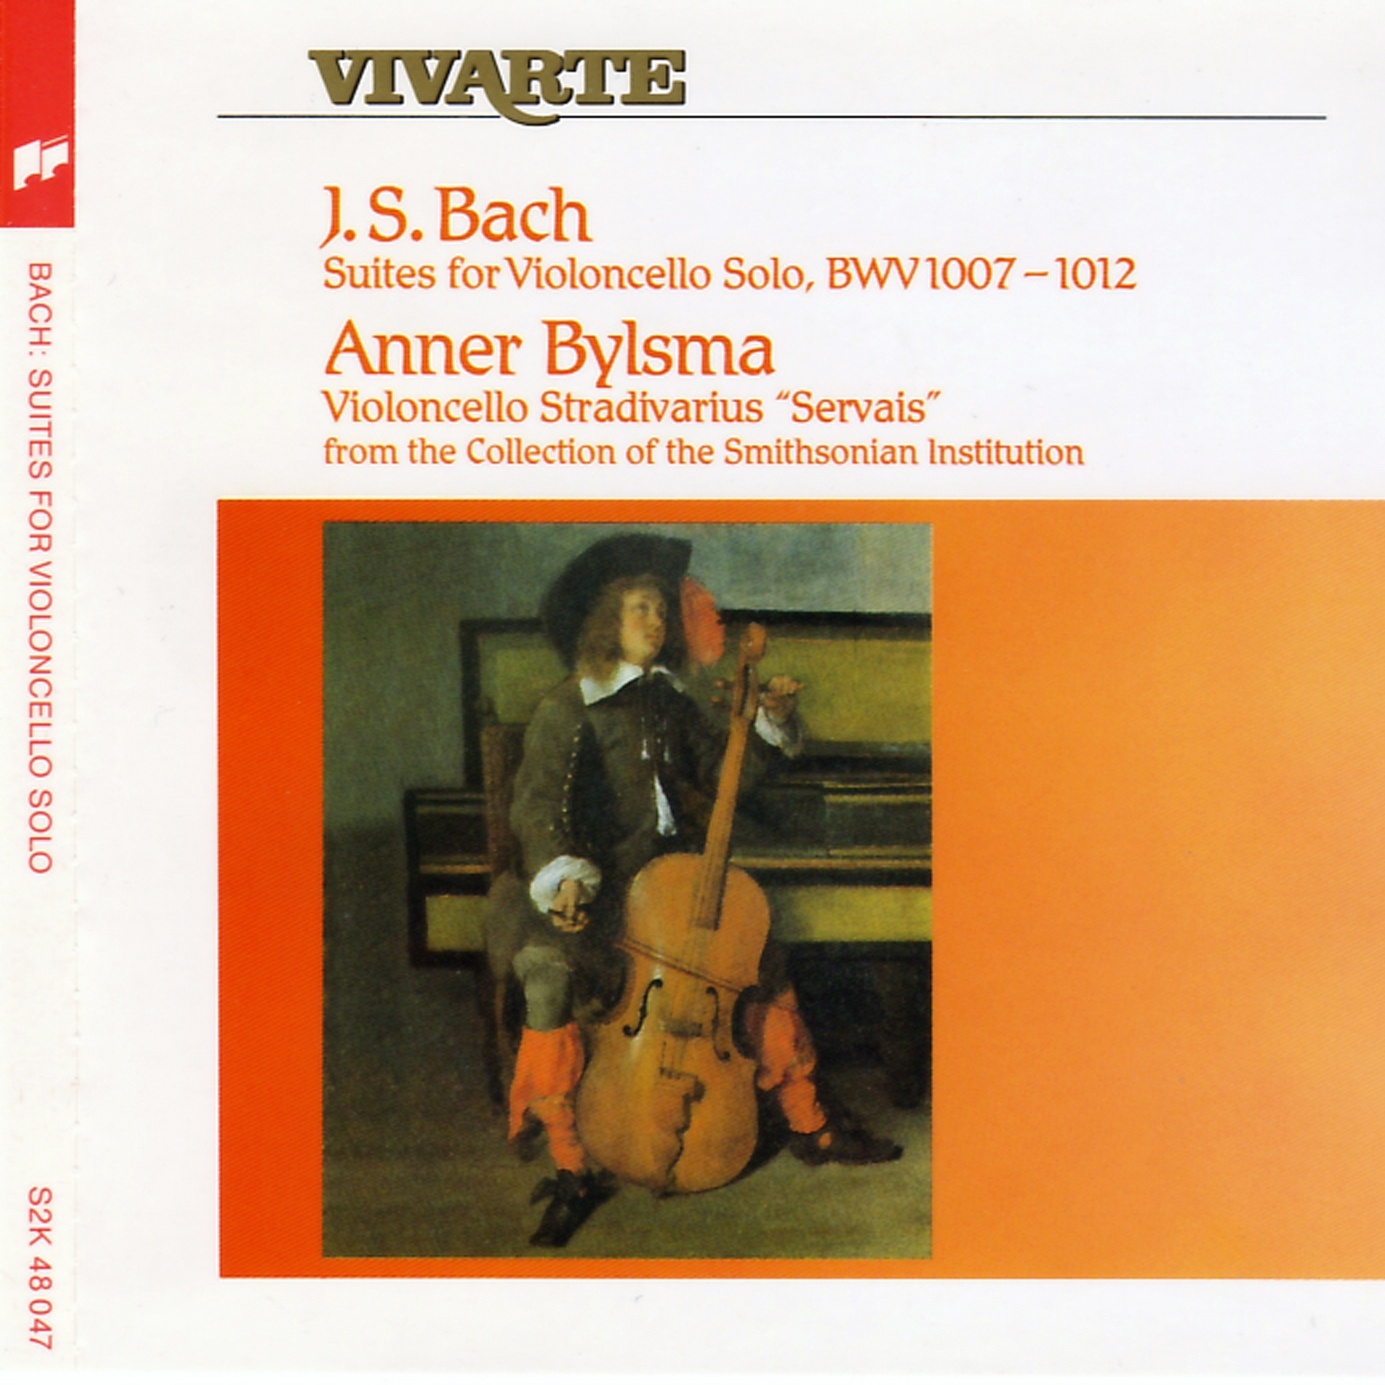 Johann Sebastian Bach: Suite no.1 in G major, BMV1007 - 4.Sarabande